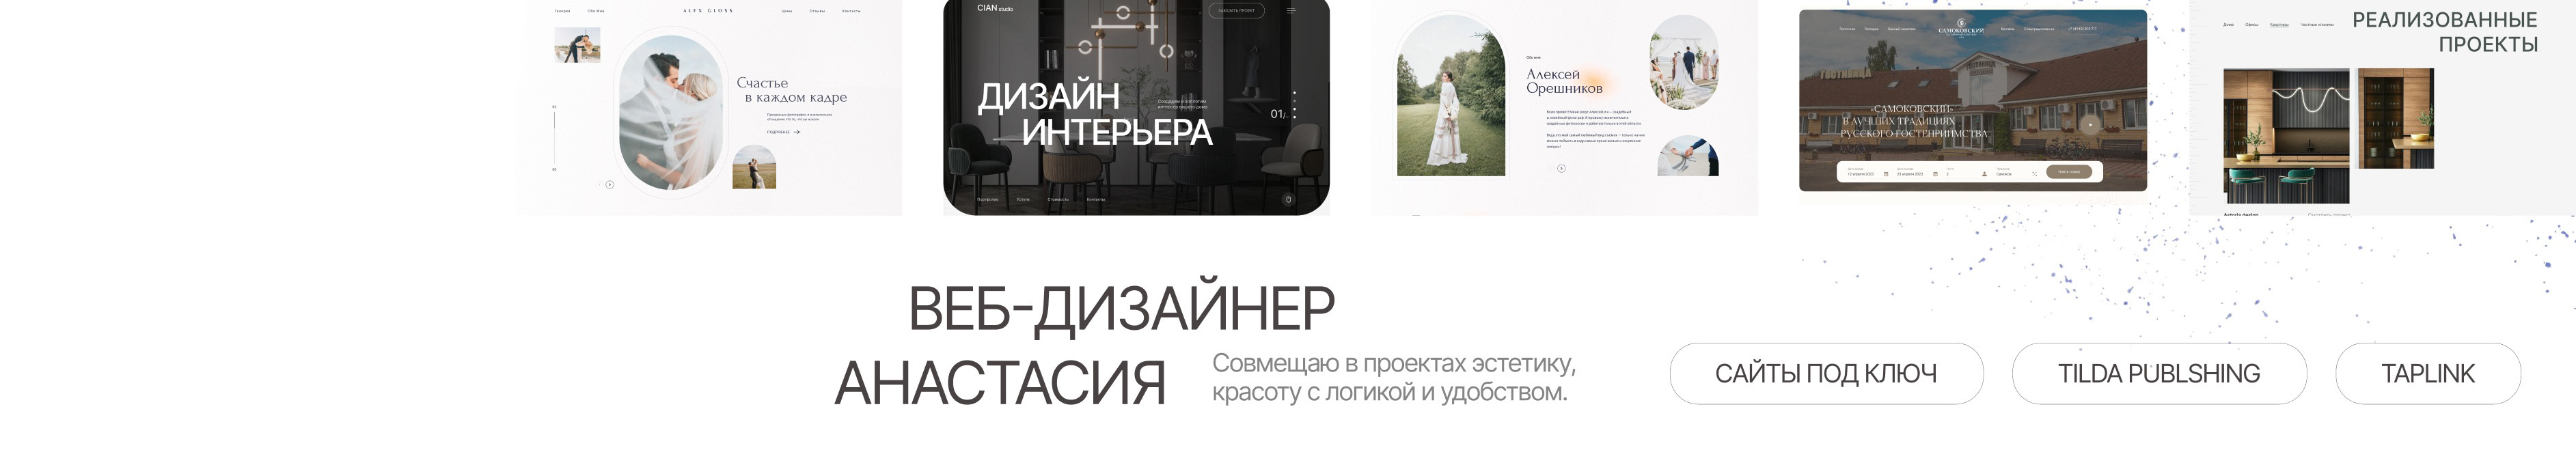 Баннер профиля Анастасия Олесюк